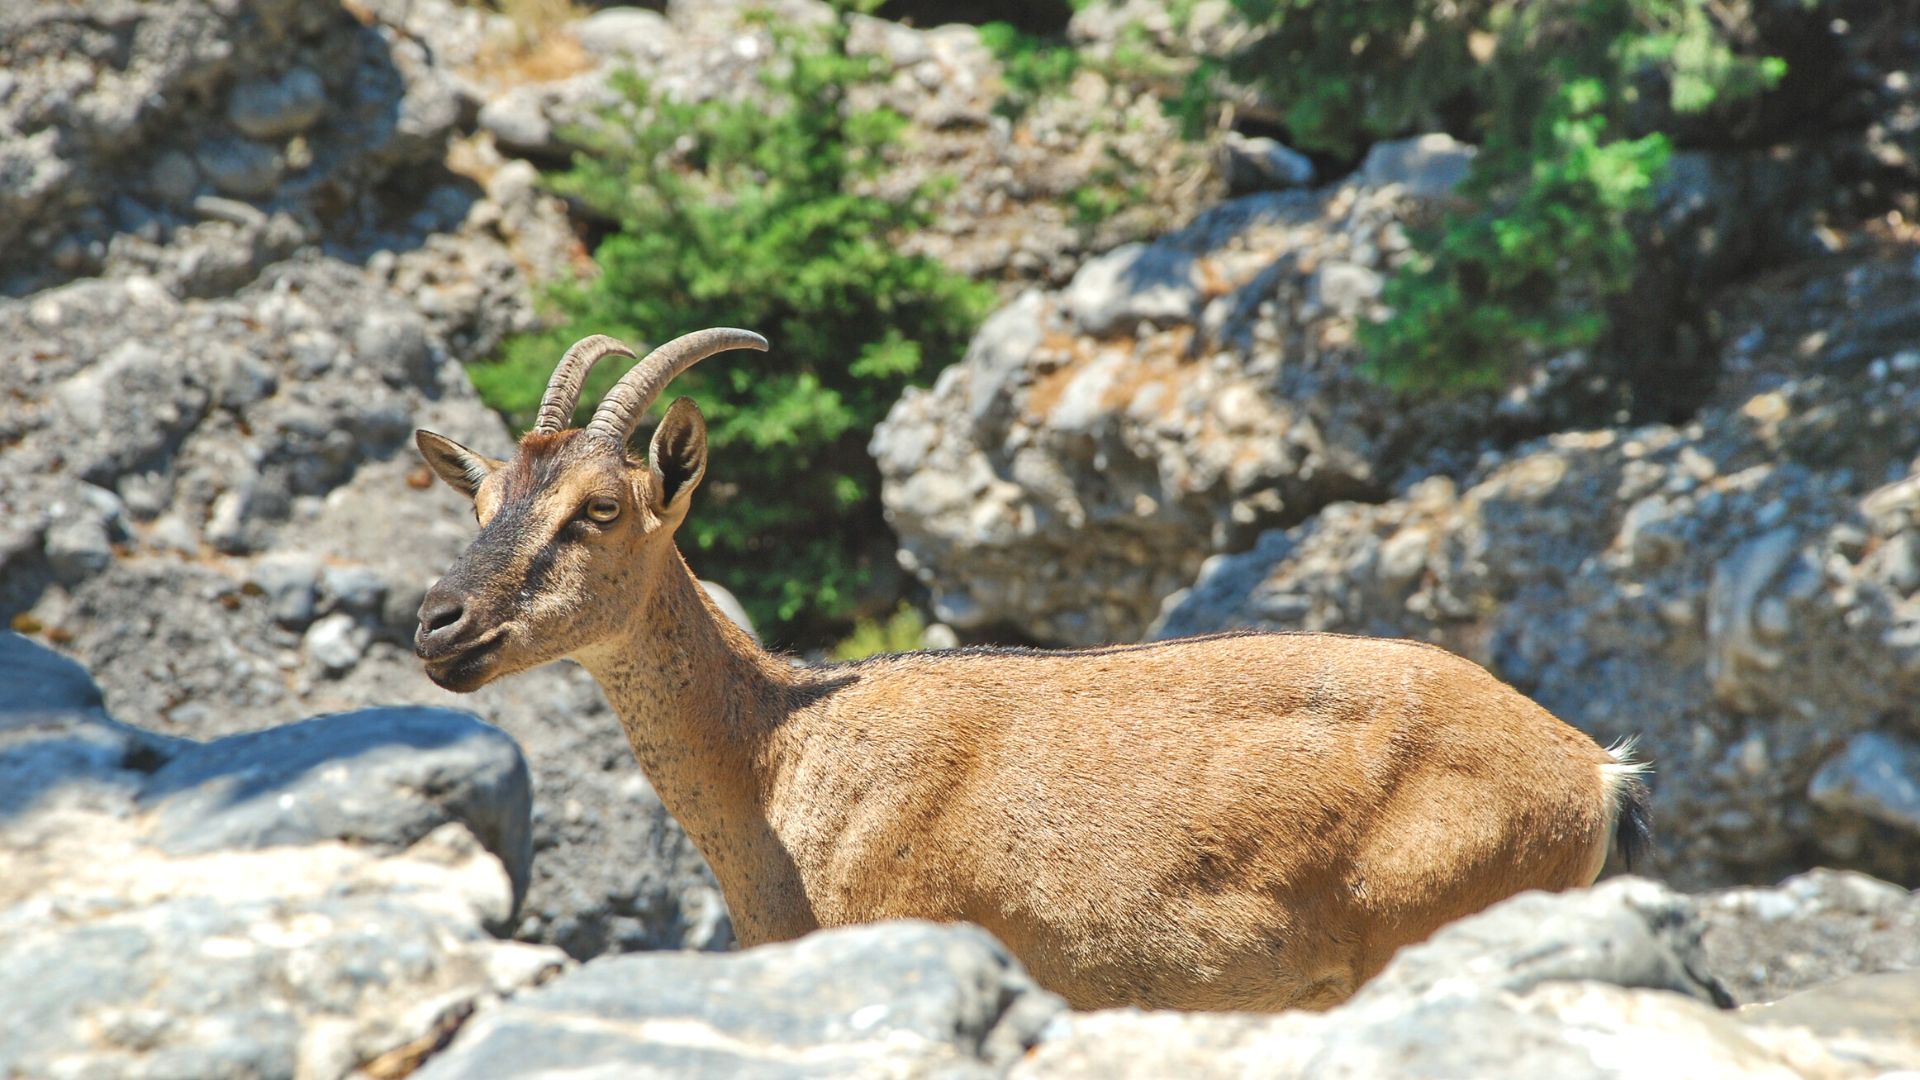 Cretan goat, Kri Kri